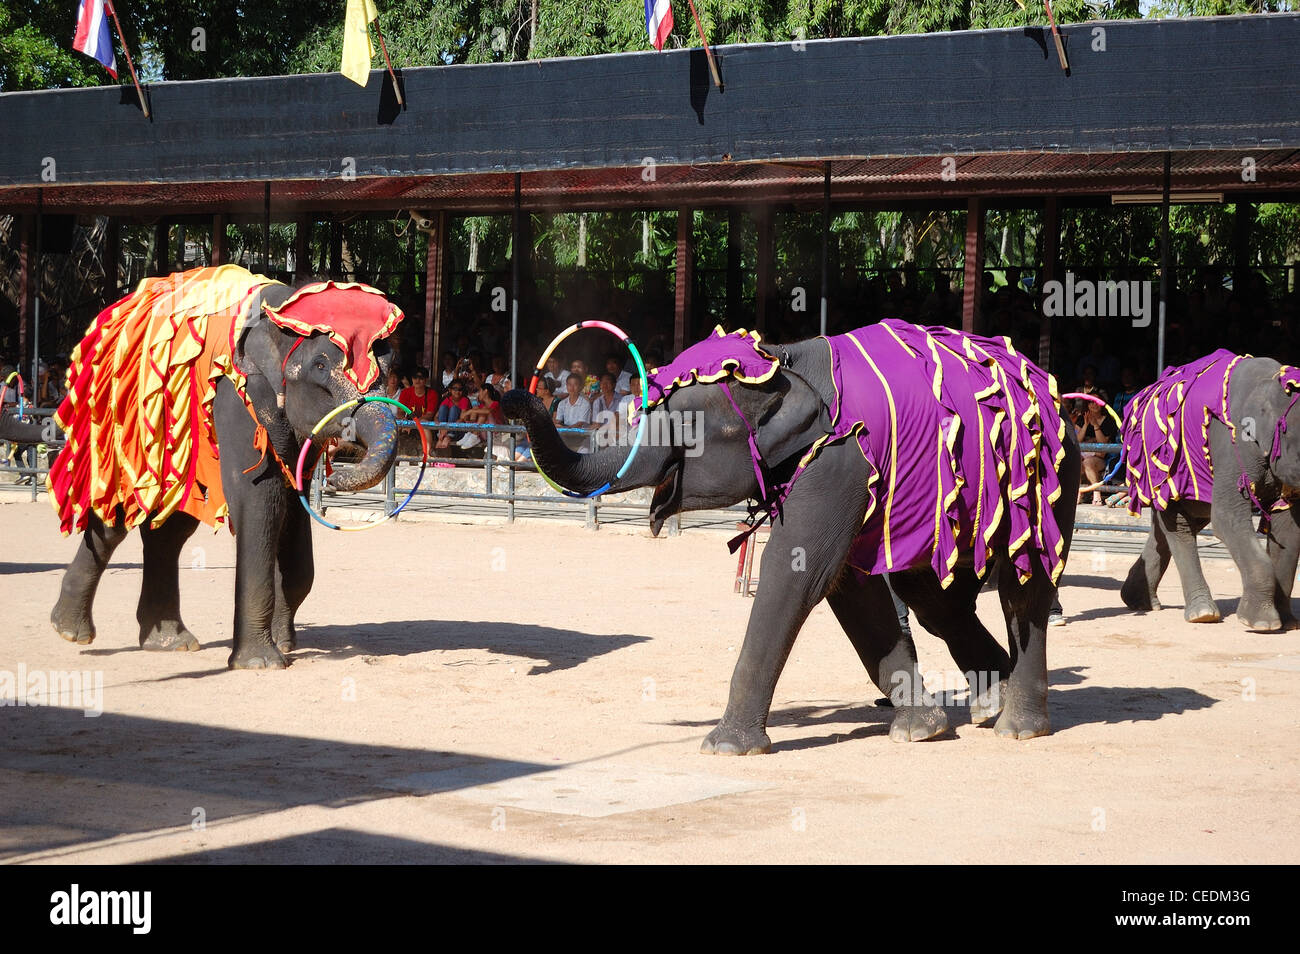 Die berühmten Elefanten-Show im Nong Nooch tropical Garden, Pattaya, Thailand Stockfoto